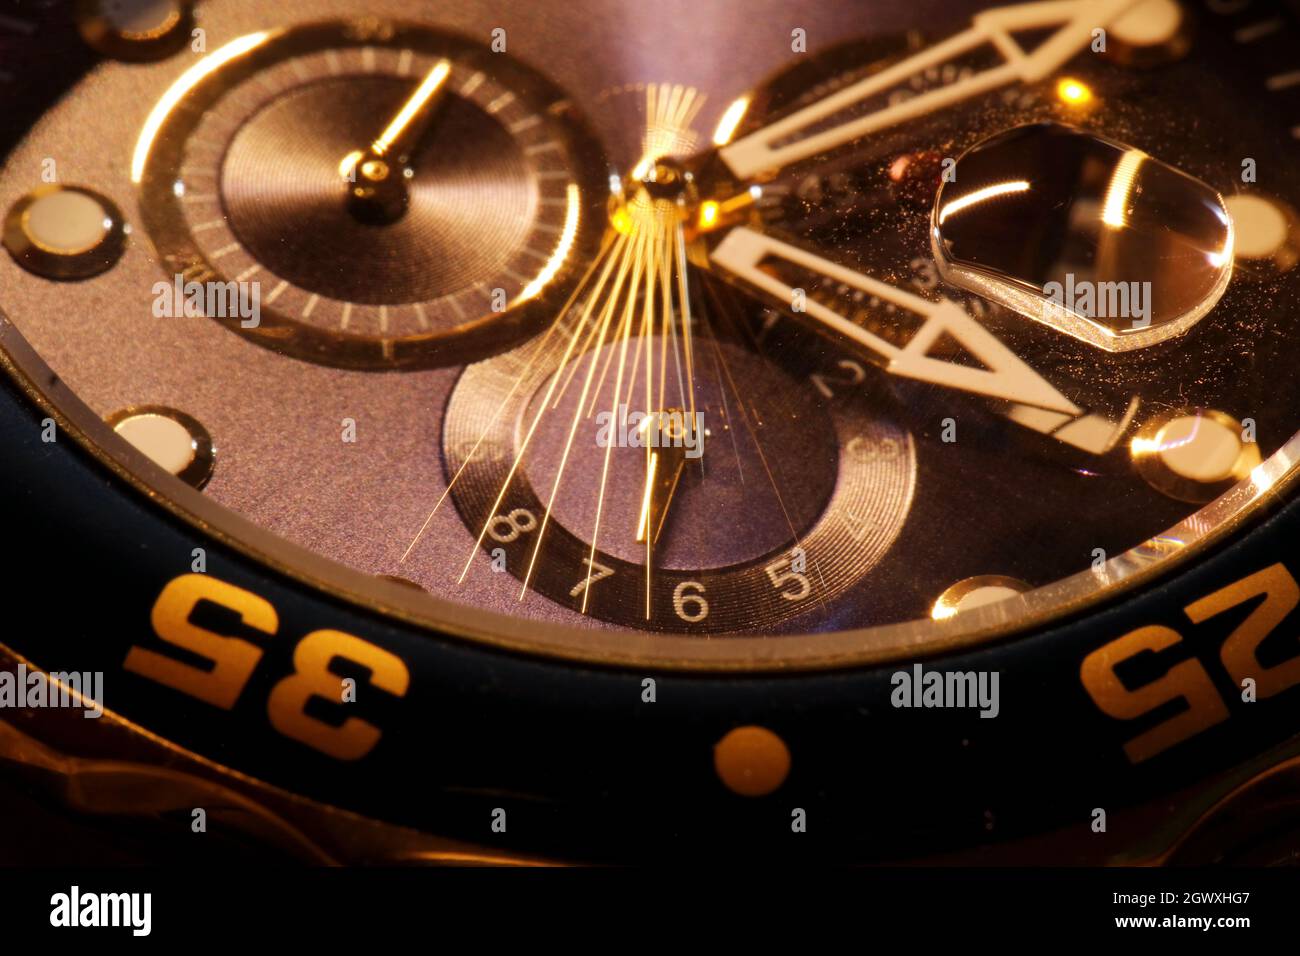 Macro analog watch second hand across face Stock Photo